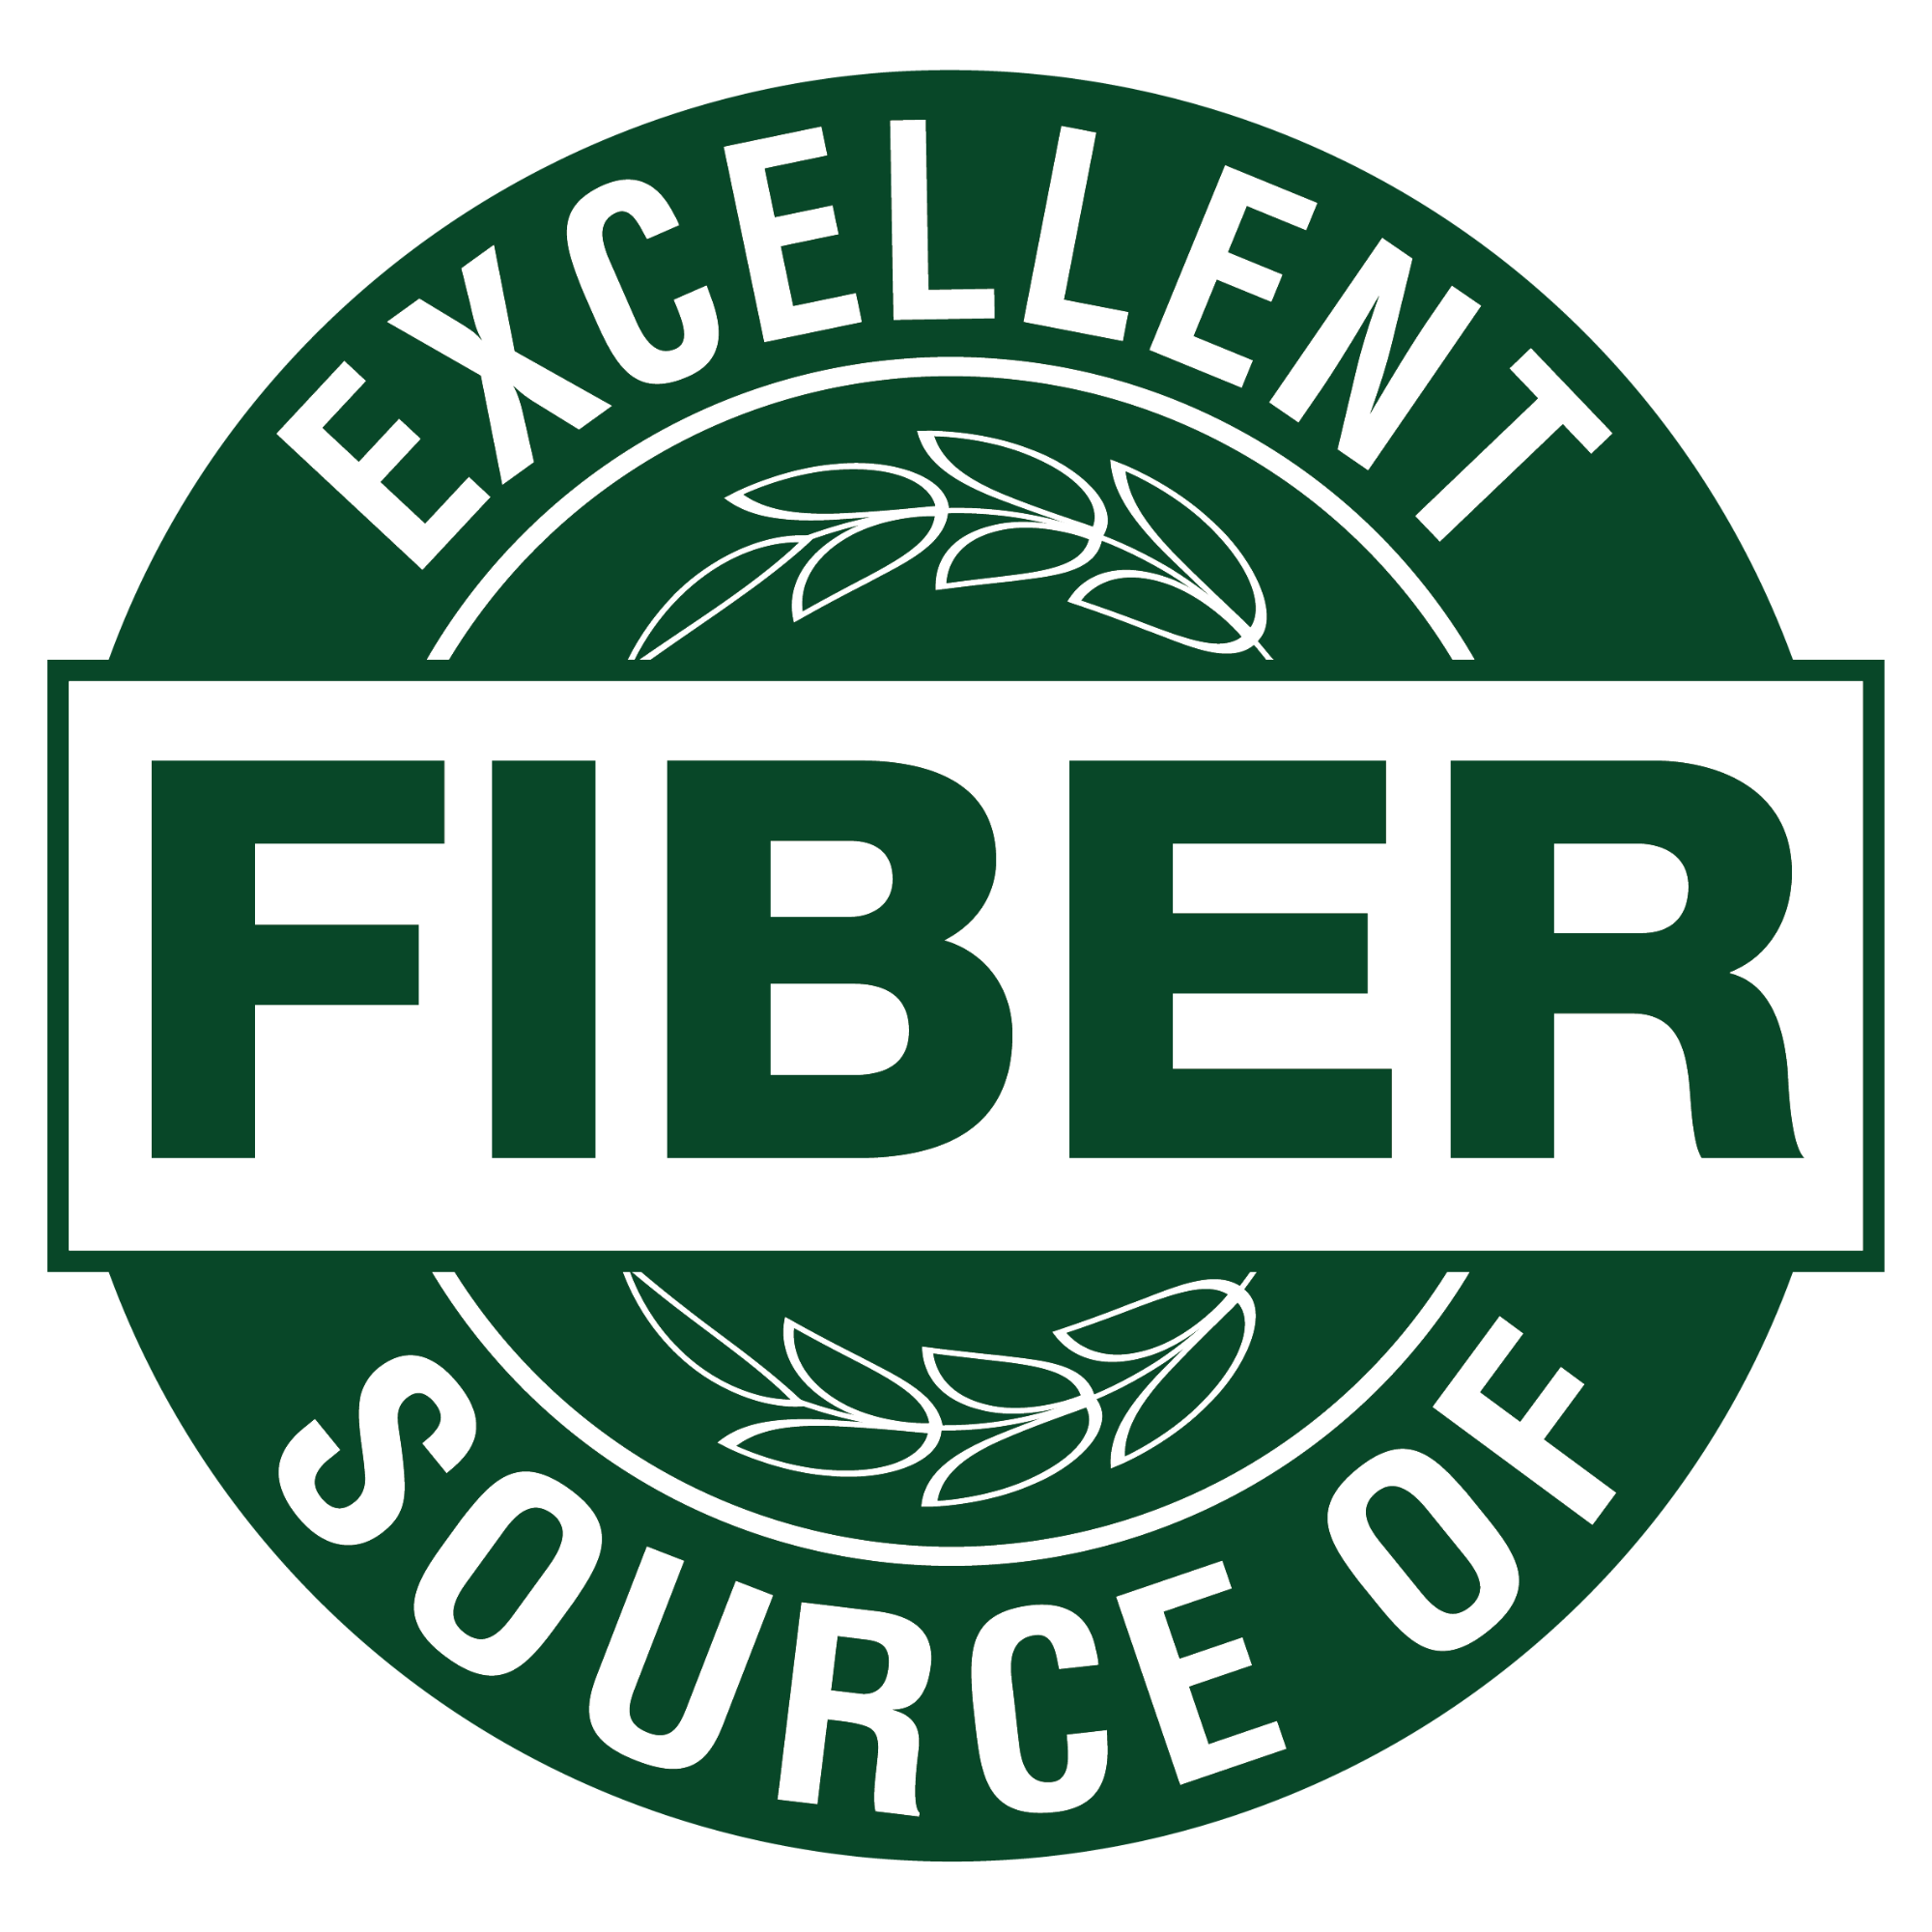 Excellent source of fiber